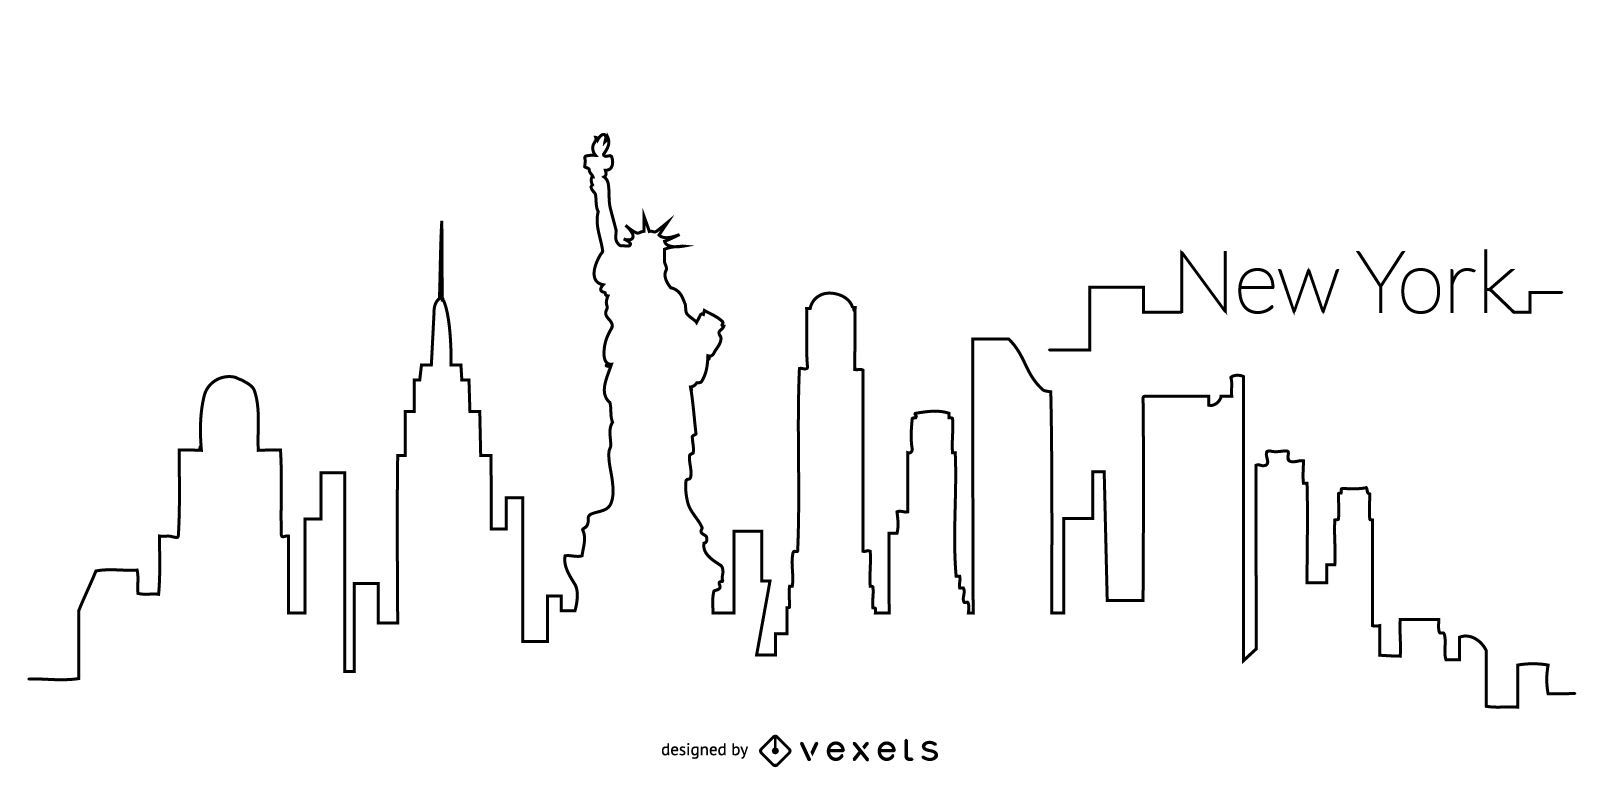 New York skyline outline